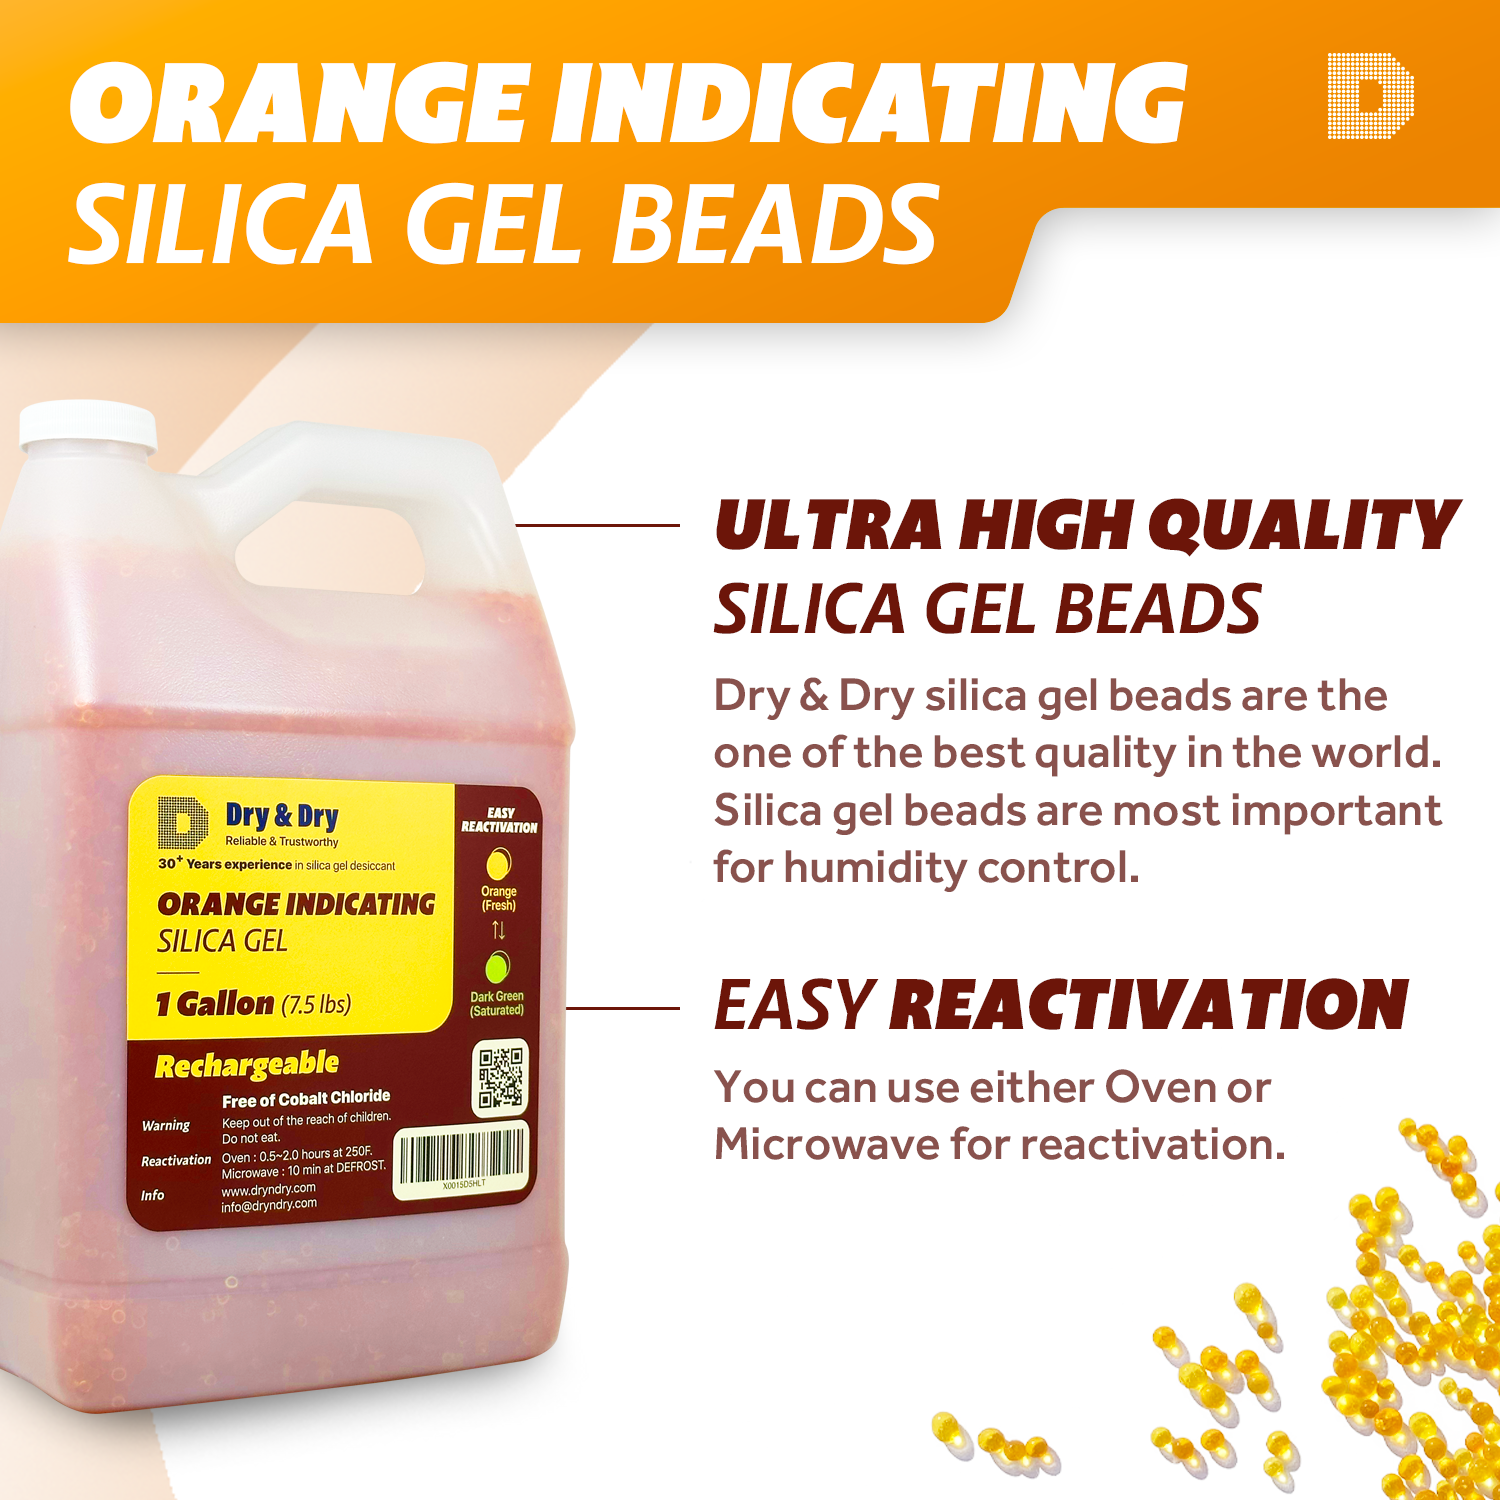 1 Gallon(7.5 LBS) "Dry & Dry" Premium Orange Indicating Silica Gel Desiccant Bead